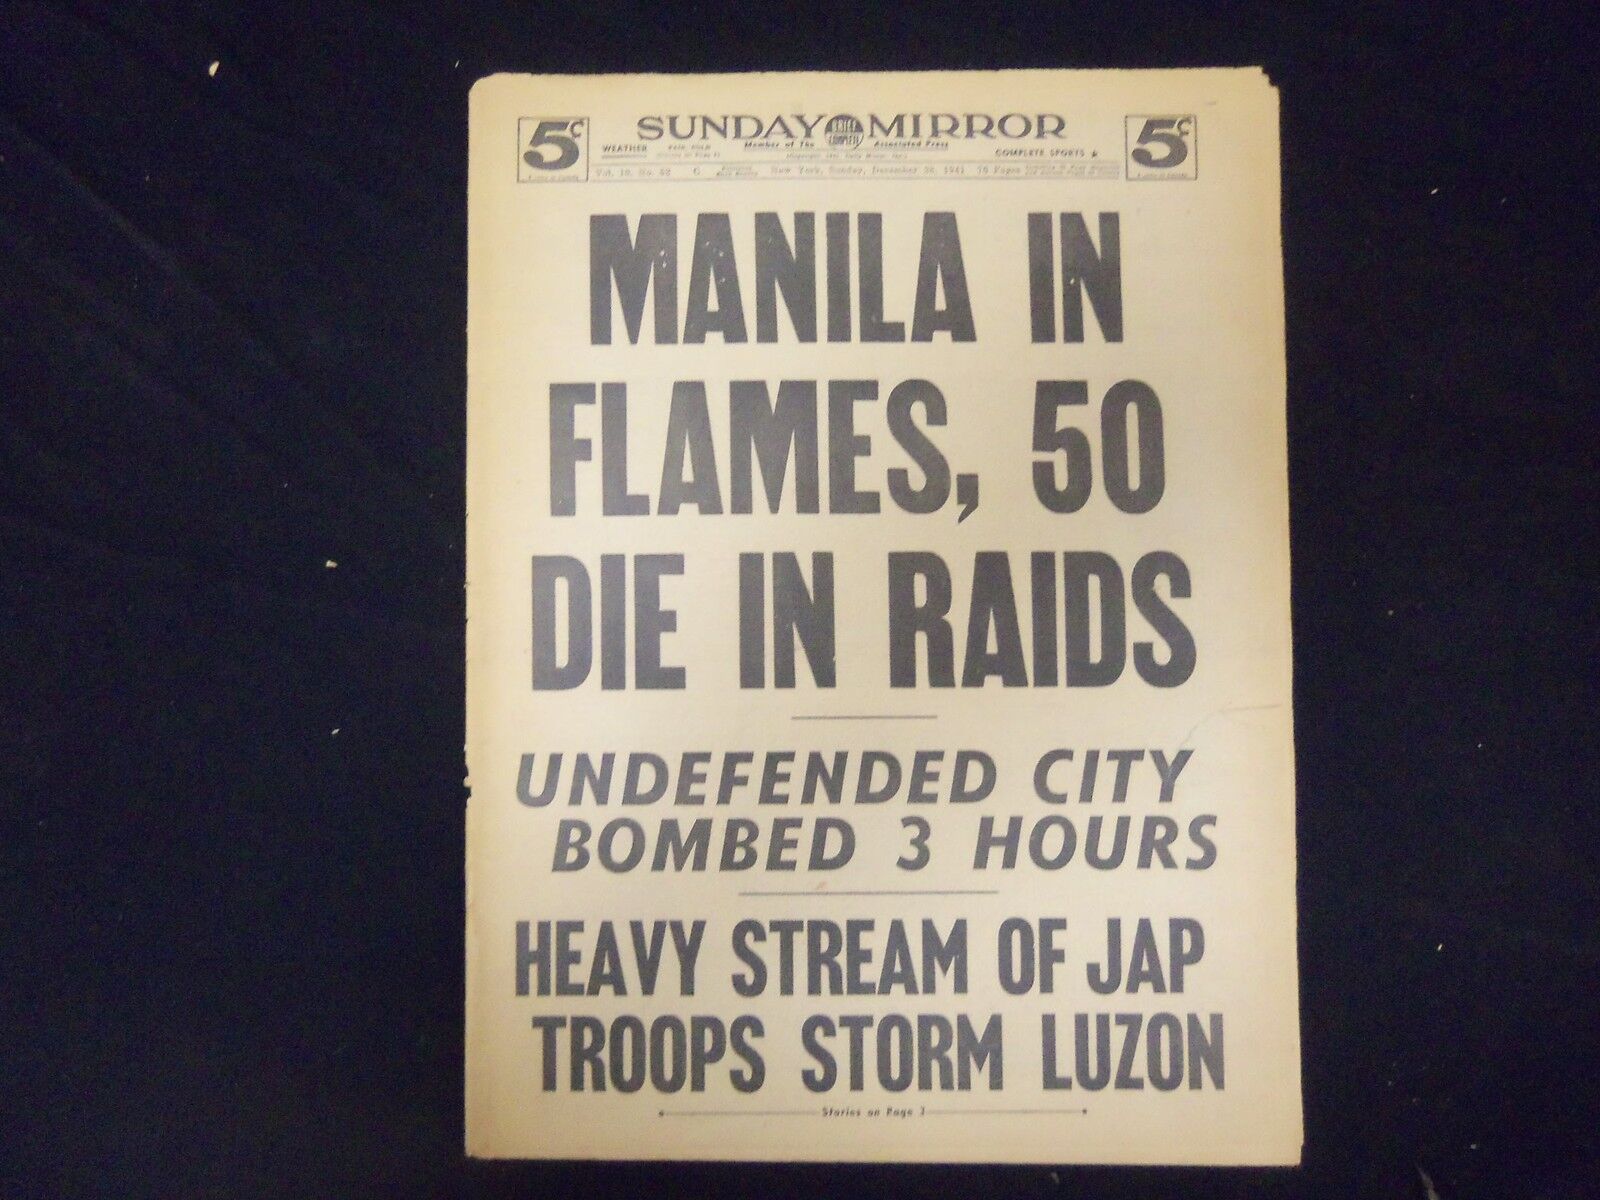 1941 DEC 28 NEW YORK SUNDAY MIRROR - MANILA IN FLAMES, 50 DIE IN RAIDS - NP 2138